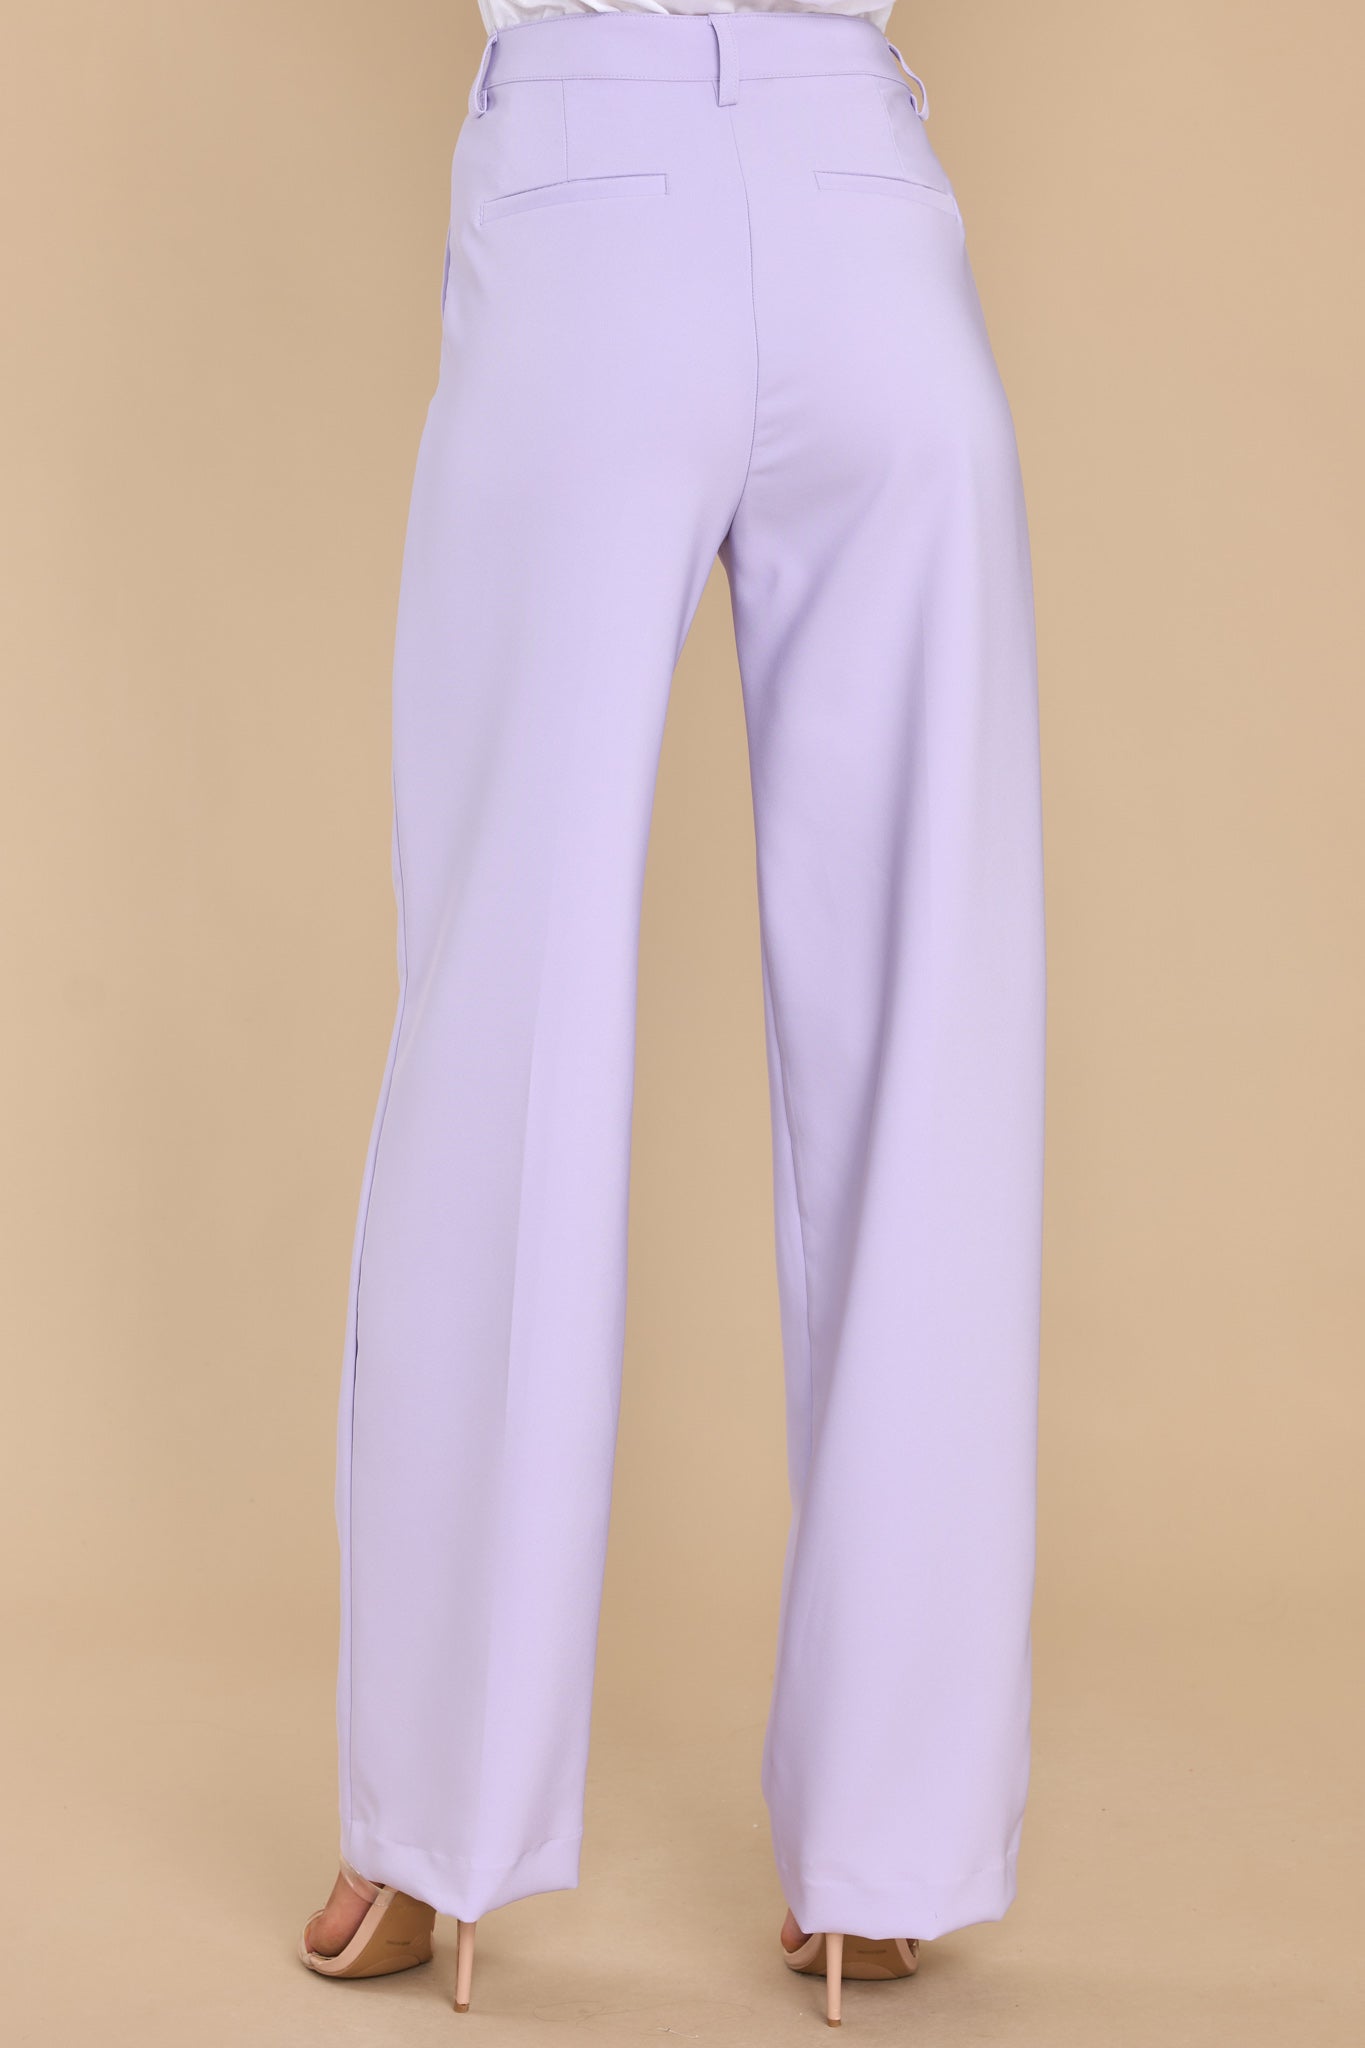 Simple Pleated Lavender Pants - Pretty Pastels